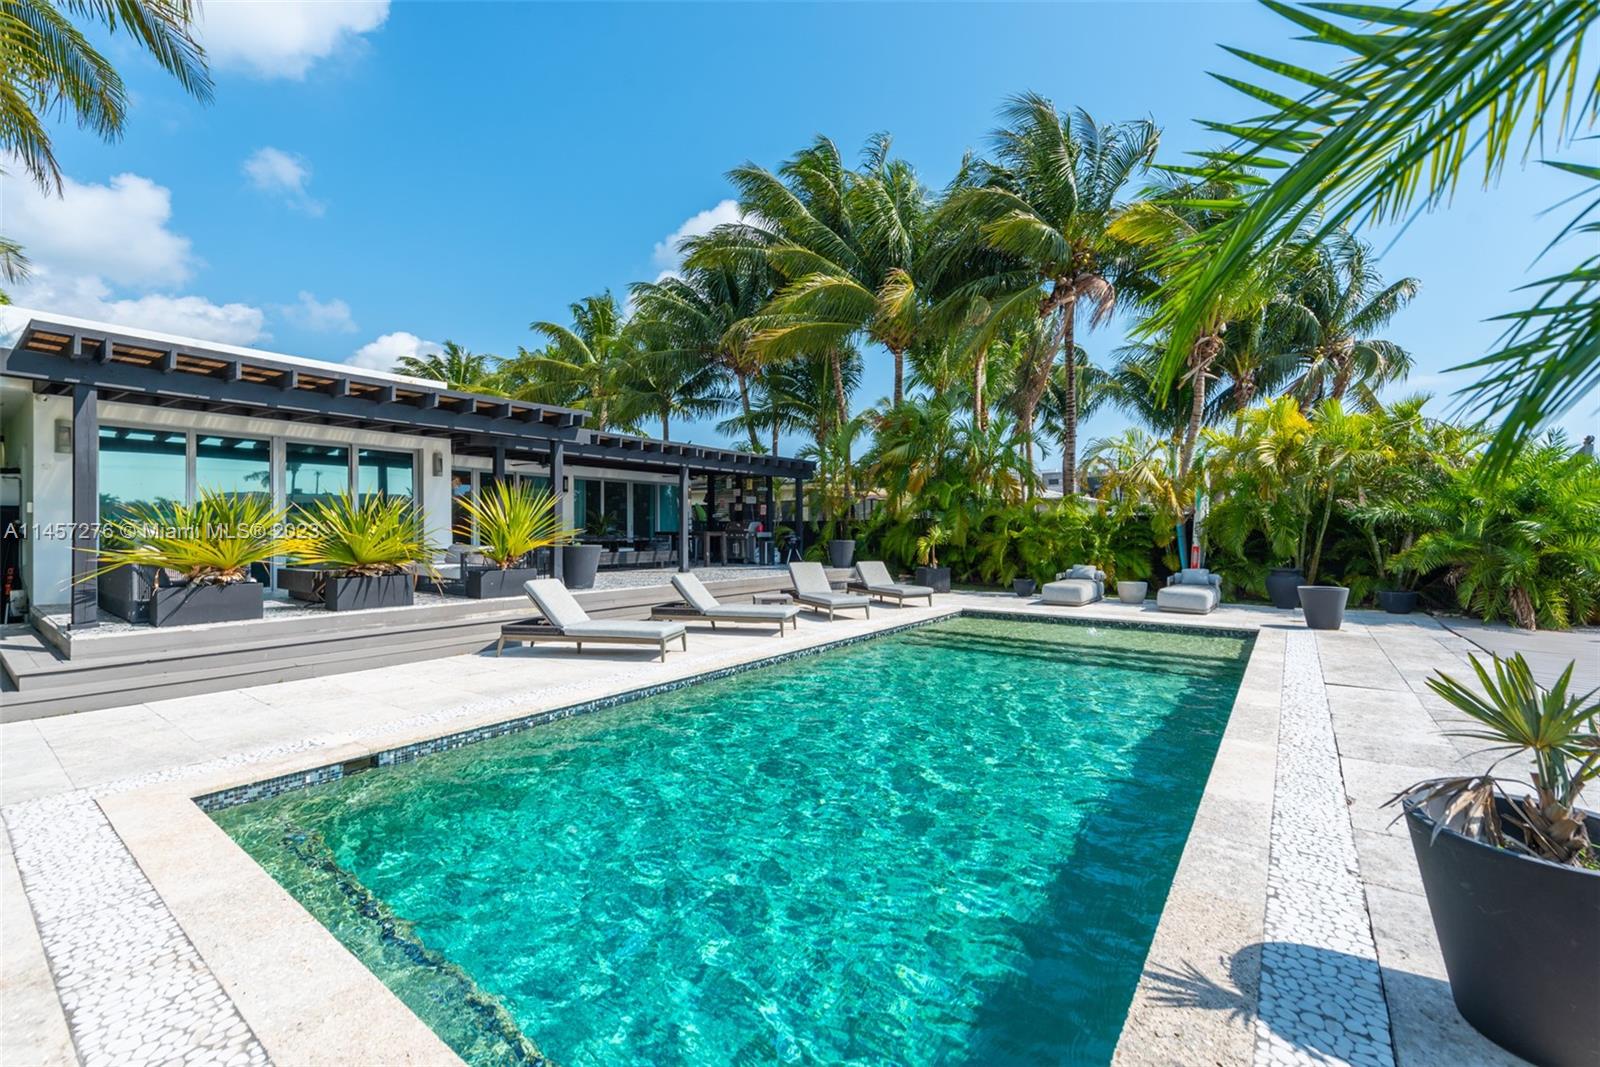 Property for Sale at 970 S Shore Dr, Miami Beach, Miami-Dade County, Florida - Bedrooms: 4 
Bathrooms: 5  - $4,700,000